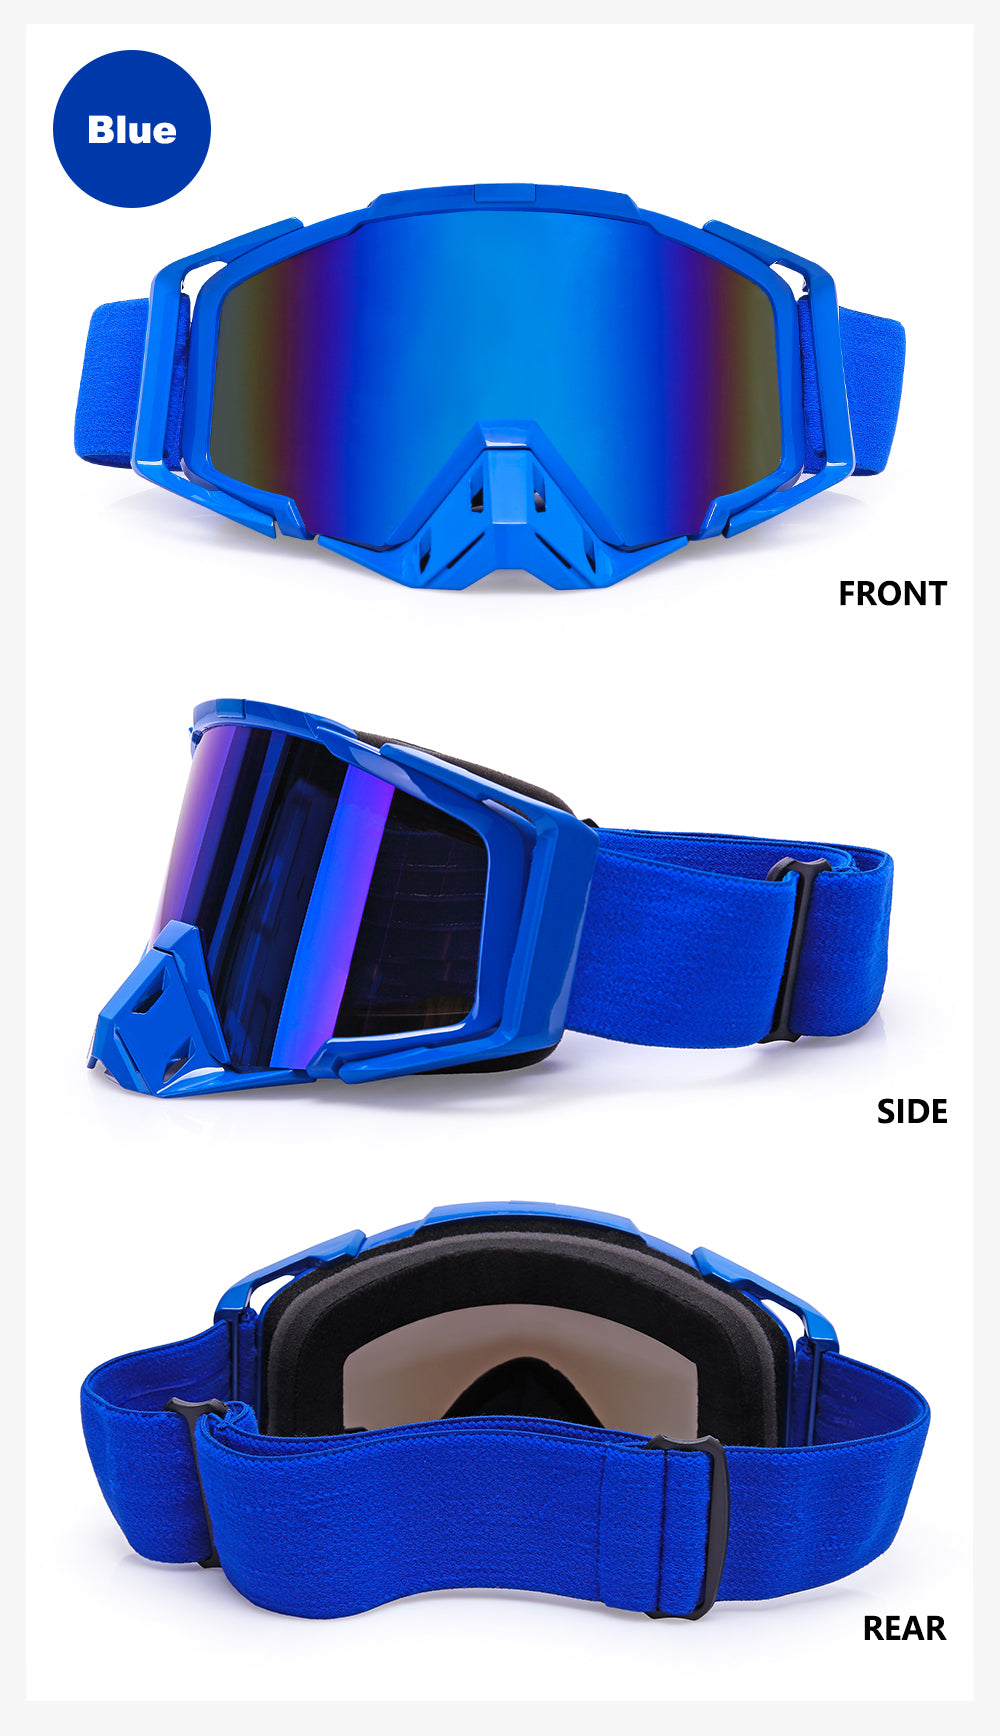 EYTOCOR Anti-impact Motocross Goggles Glasses Men And Women Motorcycle Racing Gafas